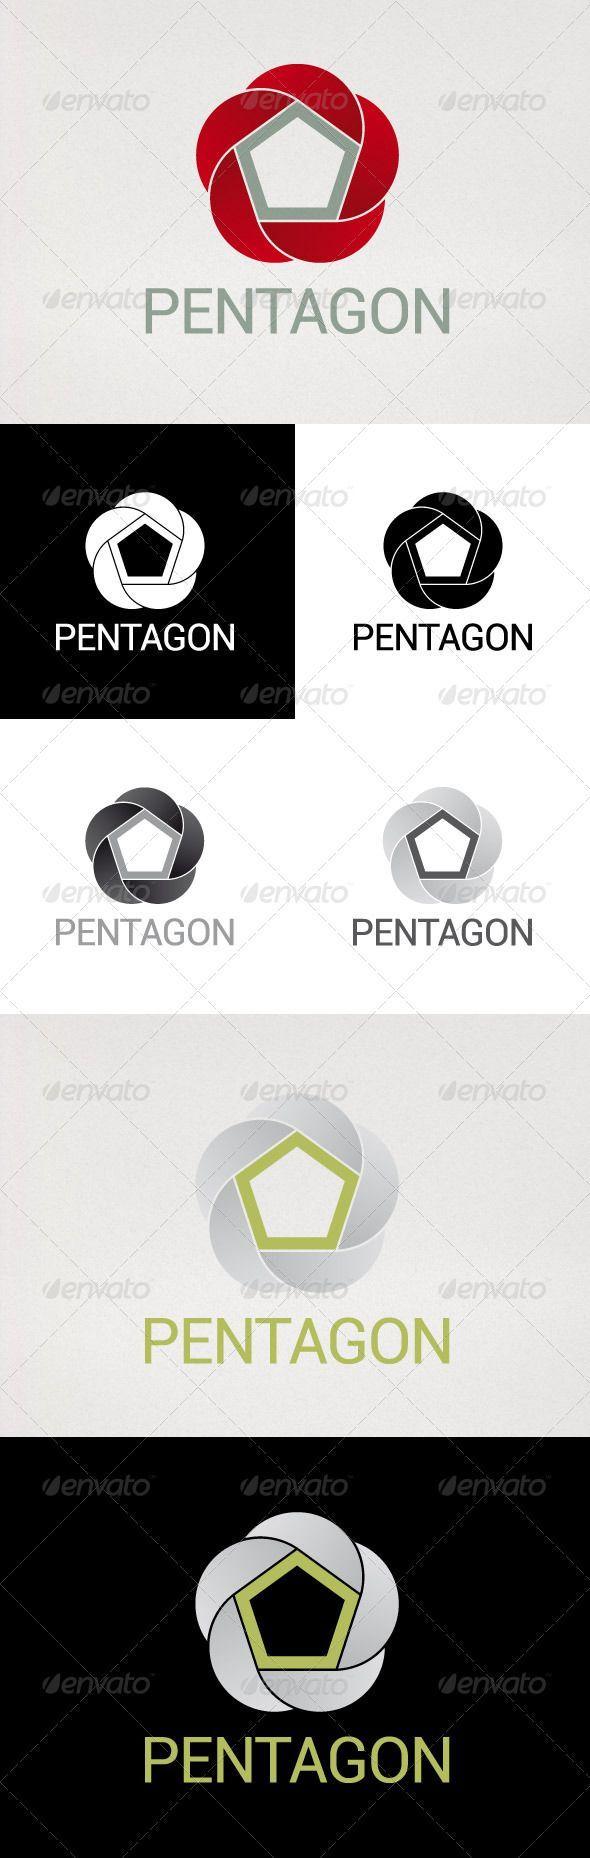 Green Red Pentagon Logo - aperture flower logo. Logos